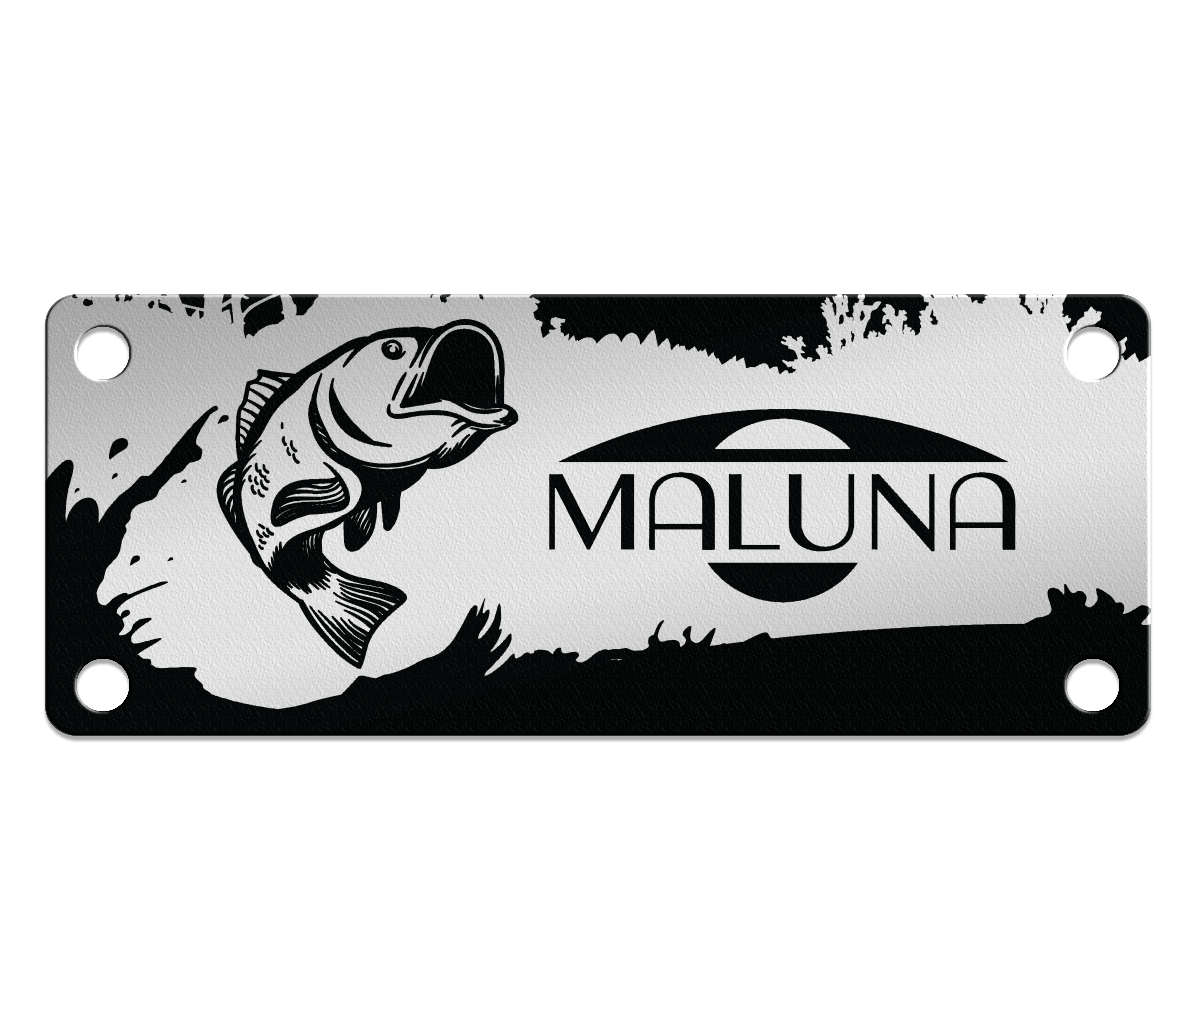 Bass Badge – Maluna Coolers